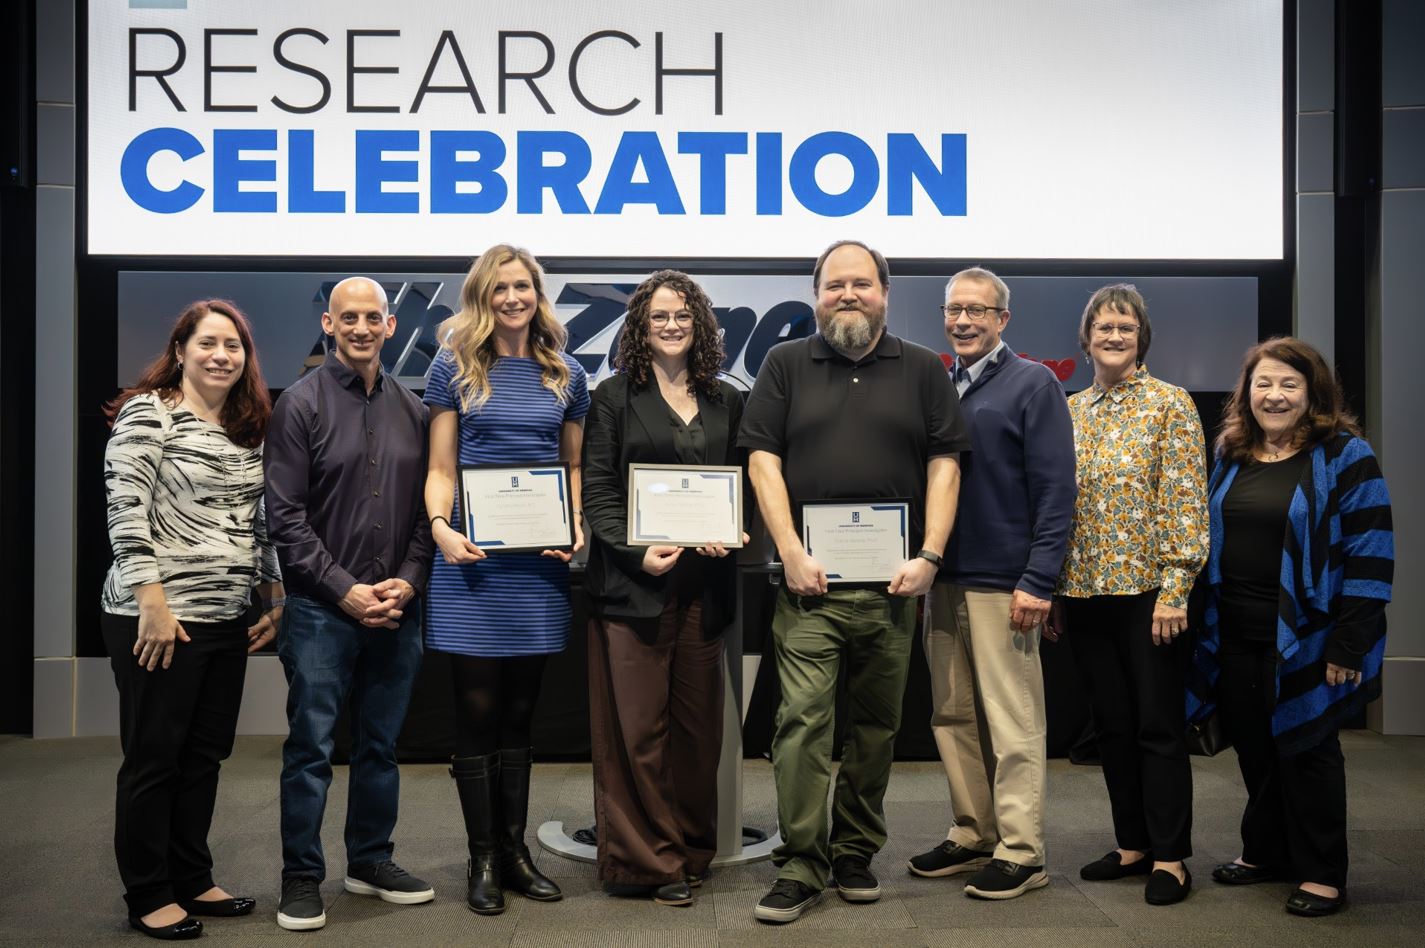 Research Celebration COE Group Photo